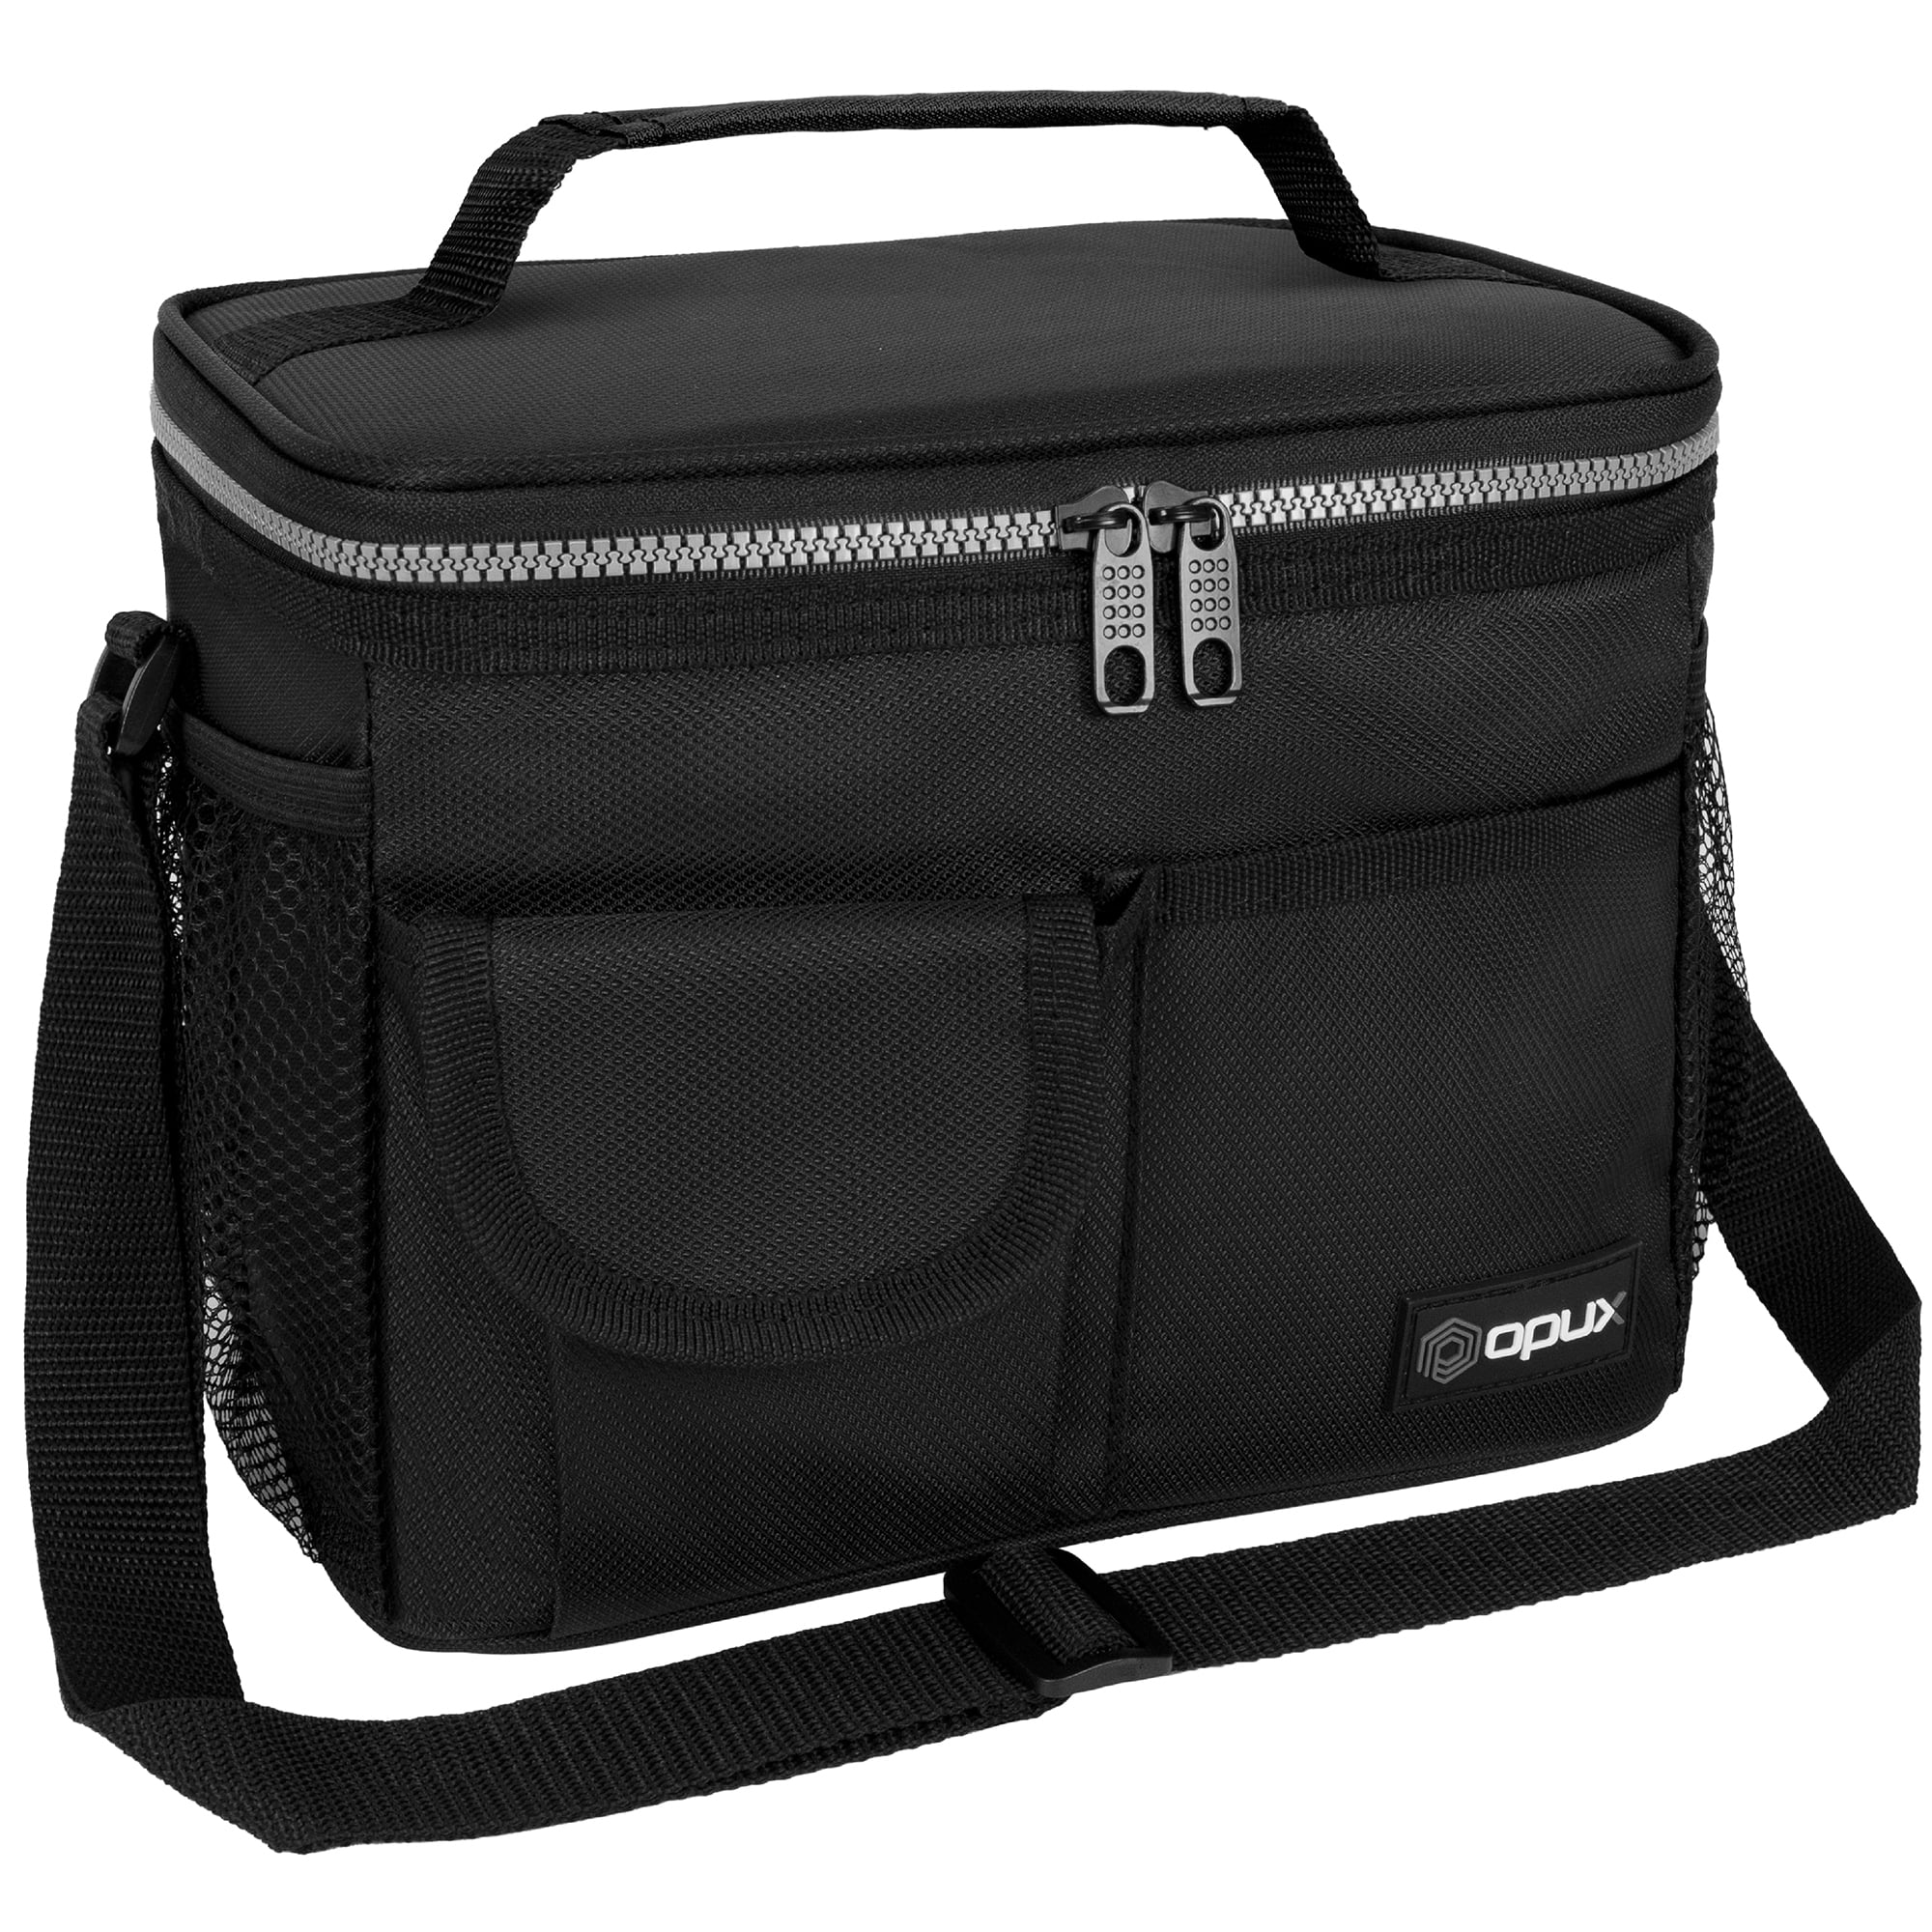 24 Can Soft Side Cooler Lunch bag Insulated Shoulder Strap New Gray Black Trim 